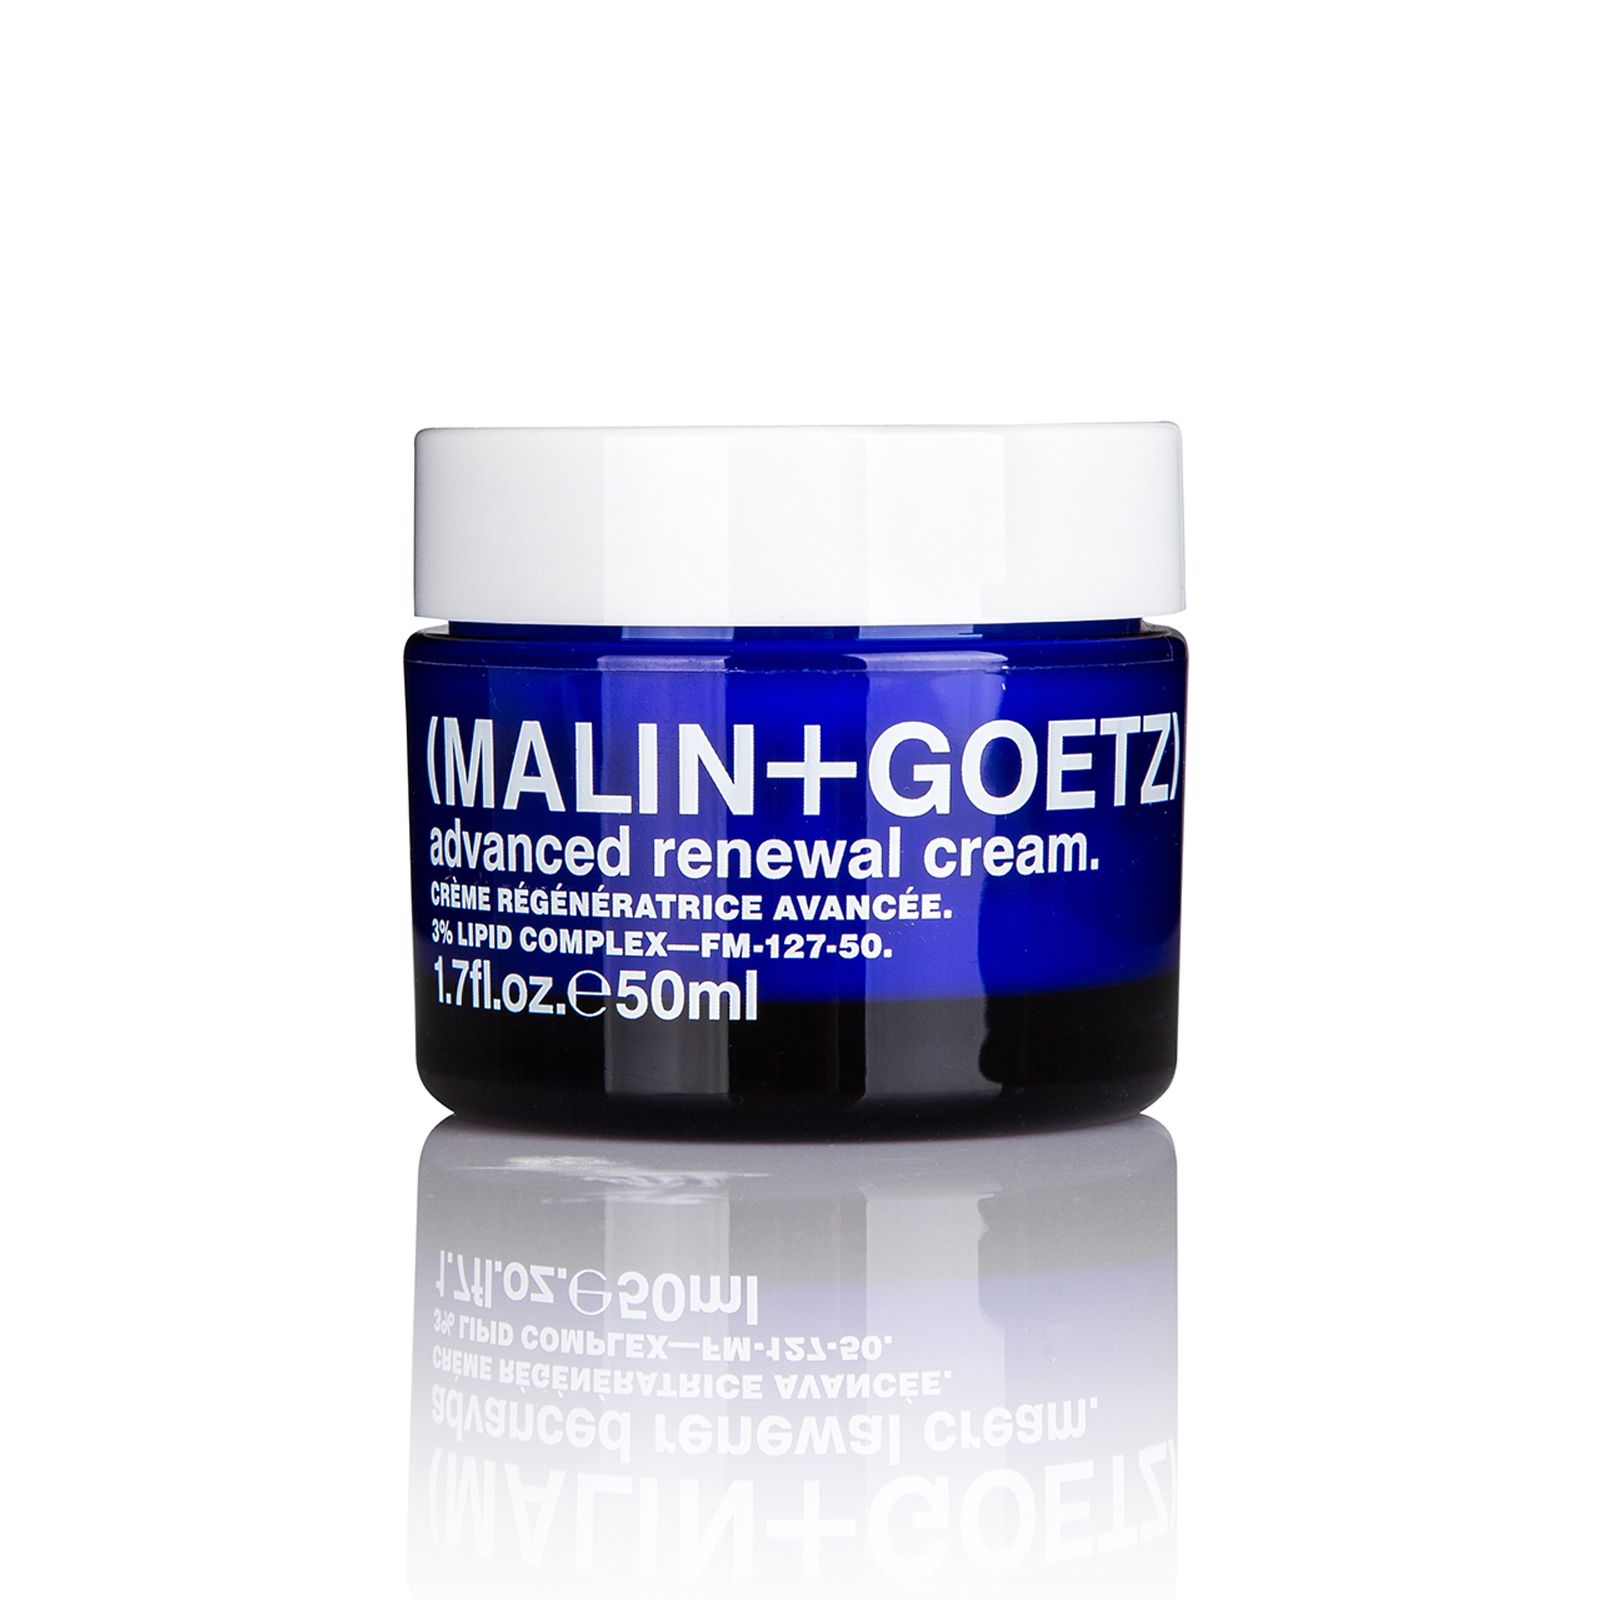 MALIN+GOETZ Advanced Renewal Cream